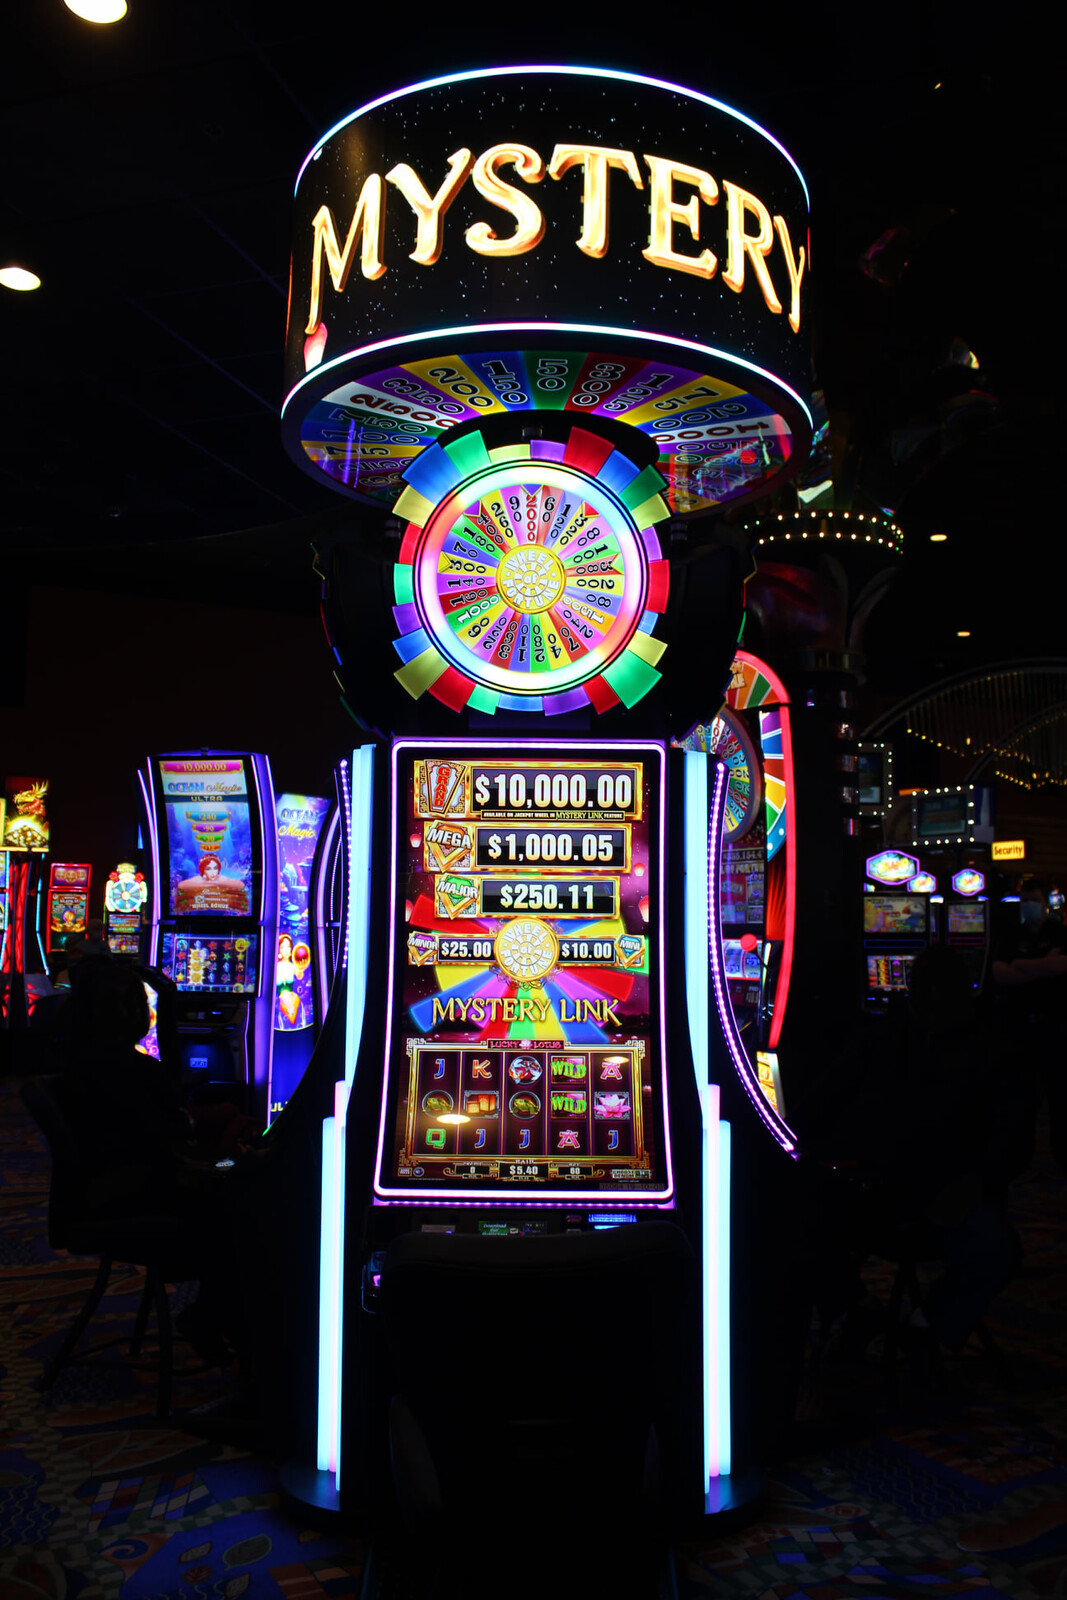 The game in a casino.